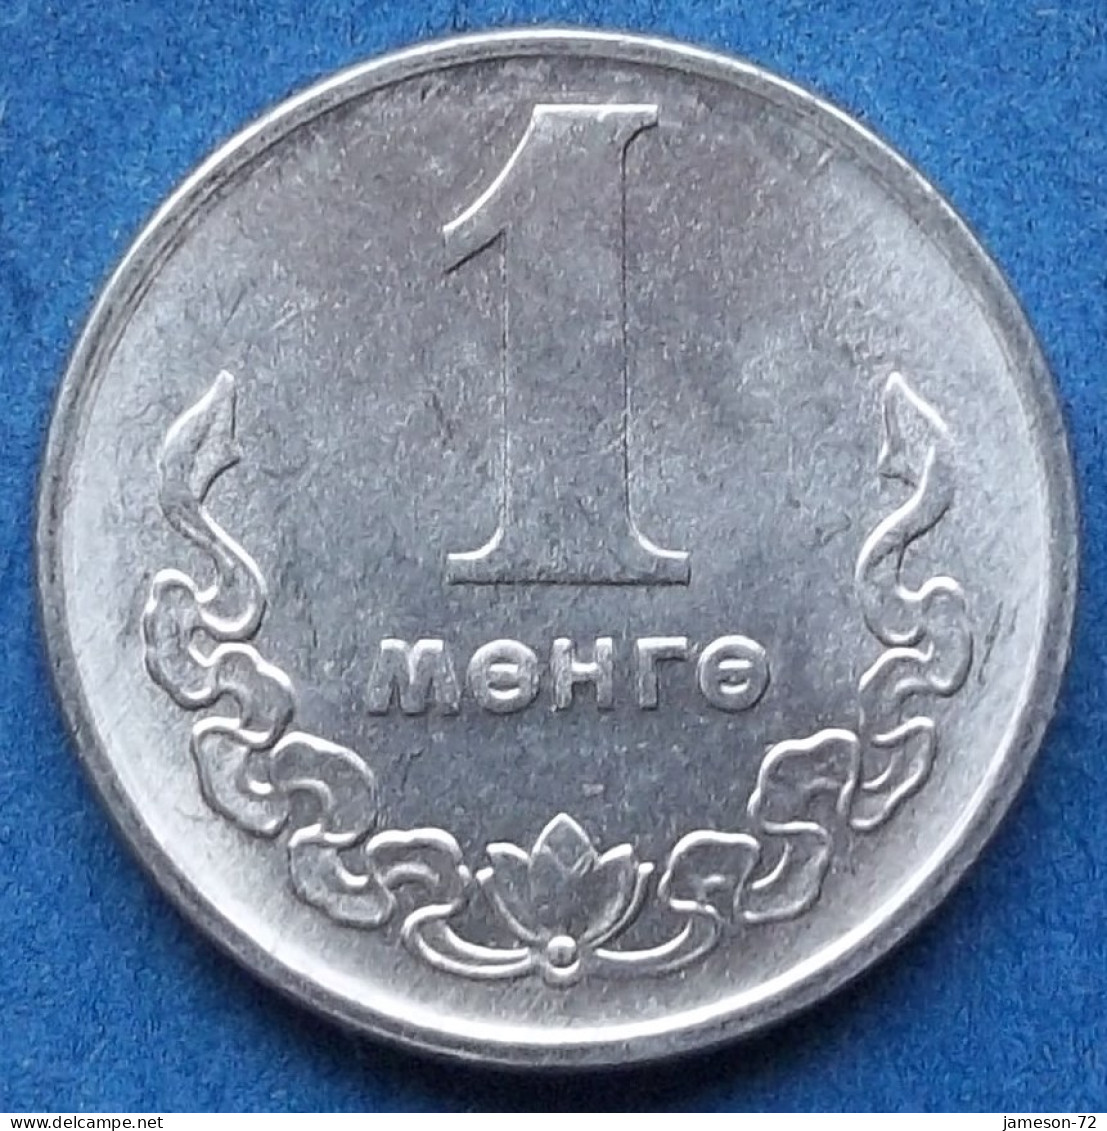 MONGOLIA - 1 Mongo 1981 KM# 27 Peoples Republic (1924-1992) - Edelweiss Coins - Mongolia